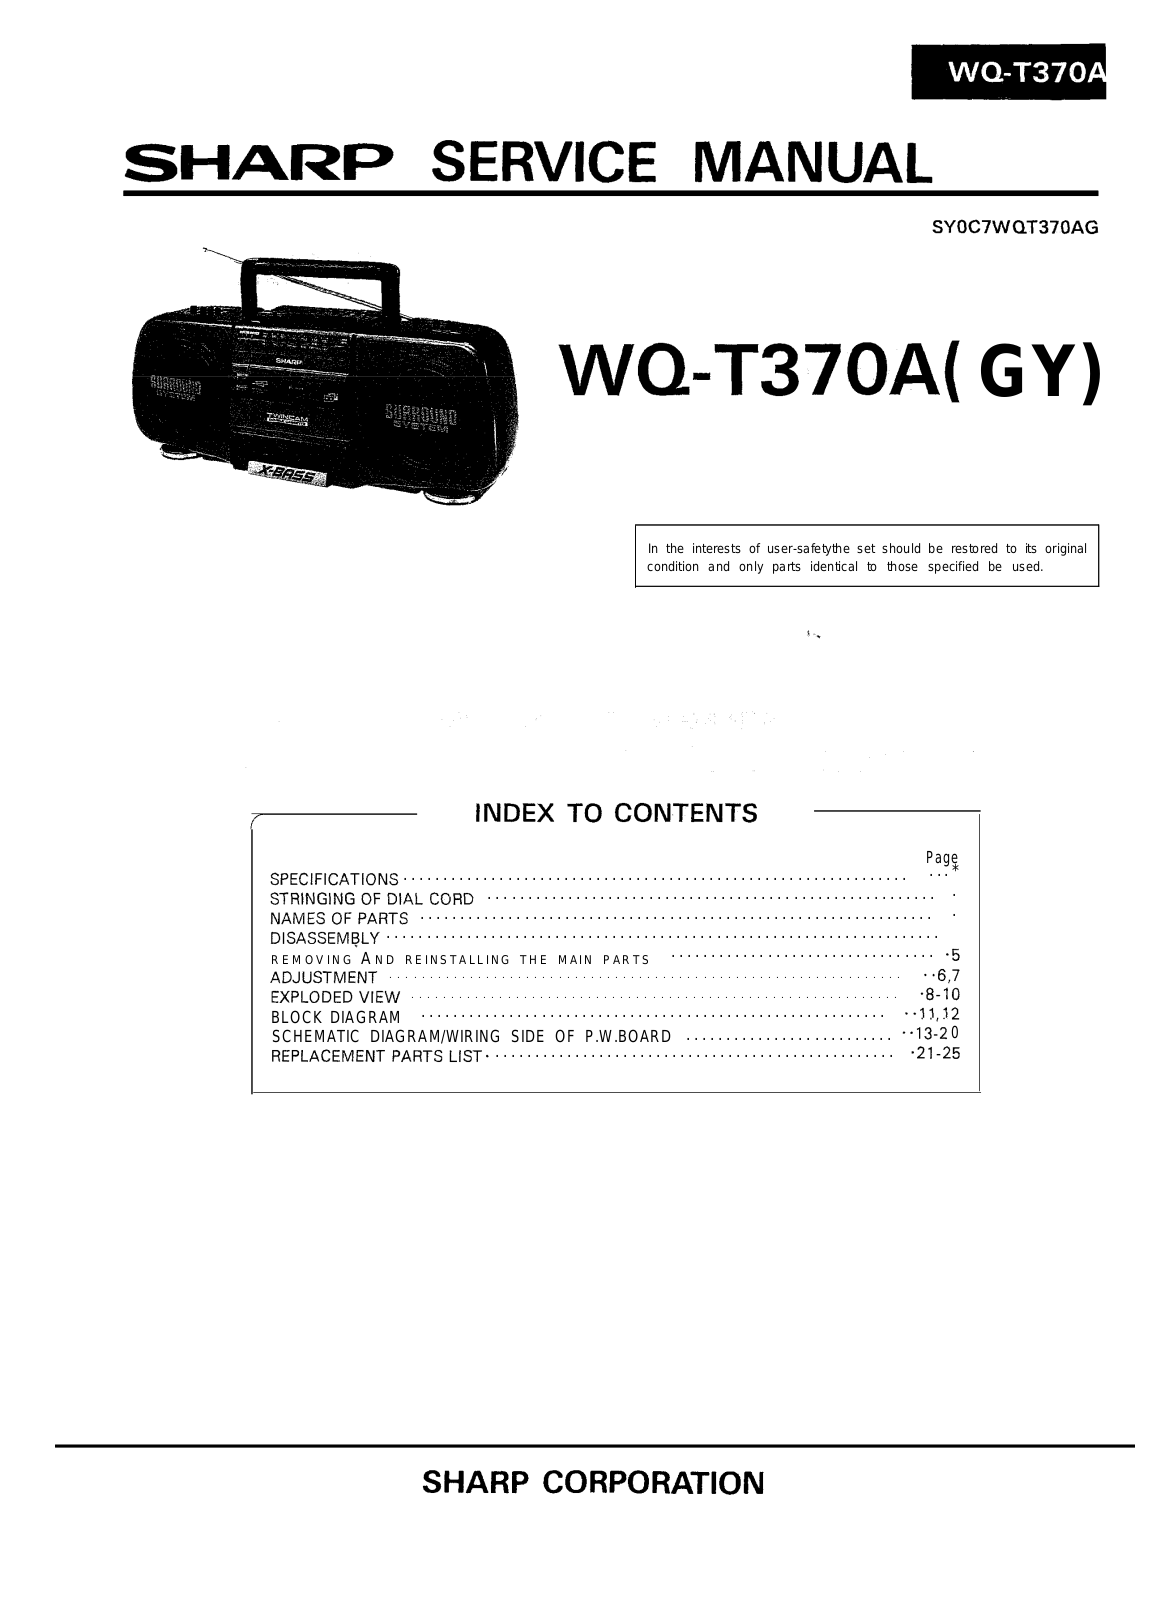 Sharp WQT-370-A Service manual